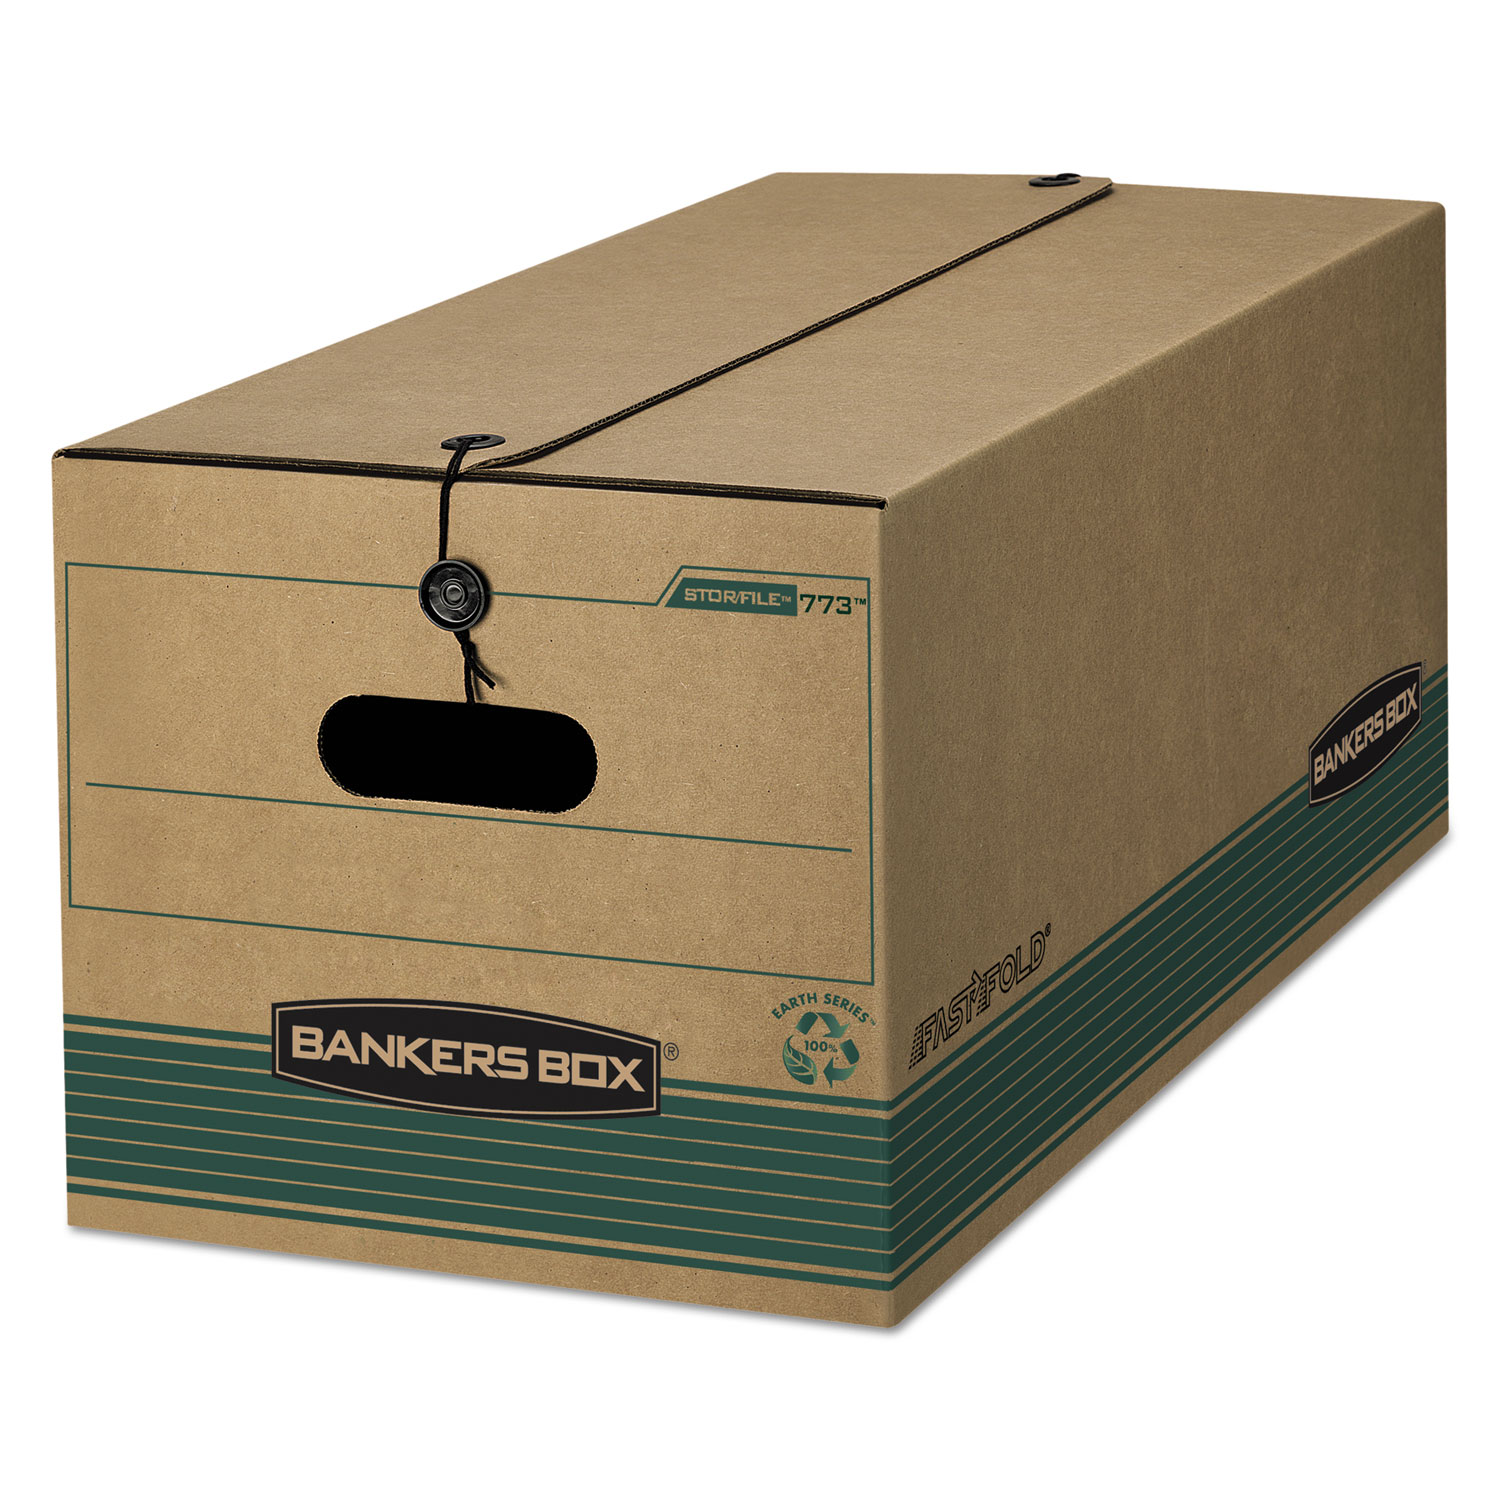  Bankers Box 00773 STOR/FILE Medium-Duty Strength Storage Boxes, Letter Files, 12.25 x 16 x 10.75, Kraft/Green, 12/Carton (FEL00773) 